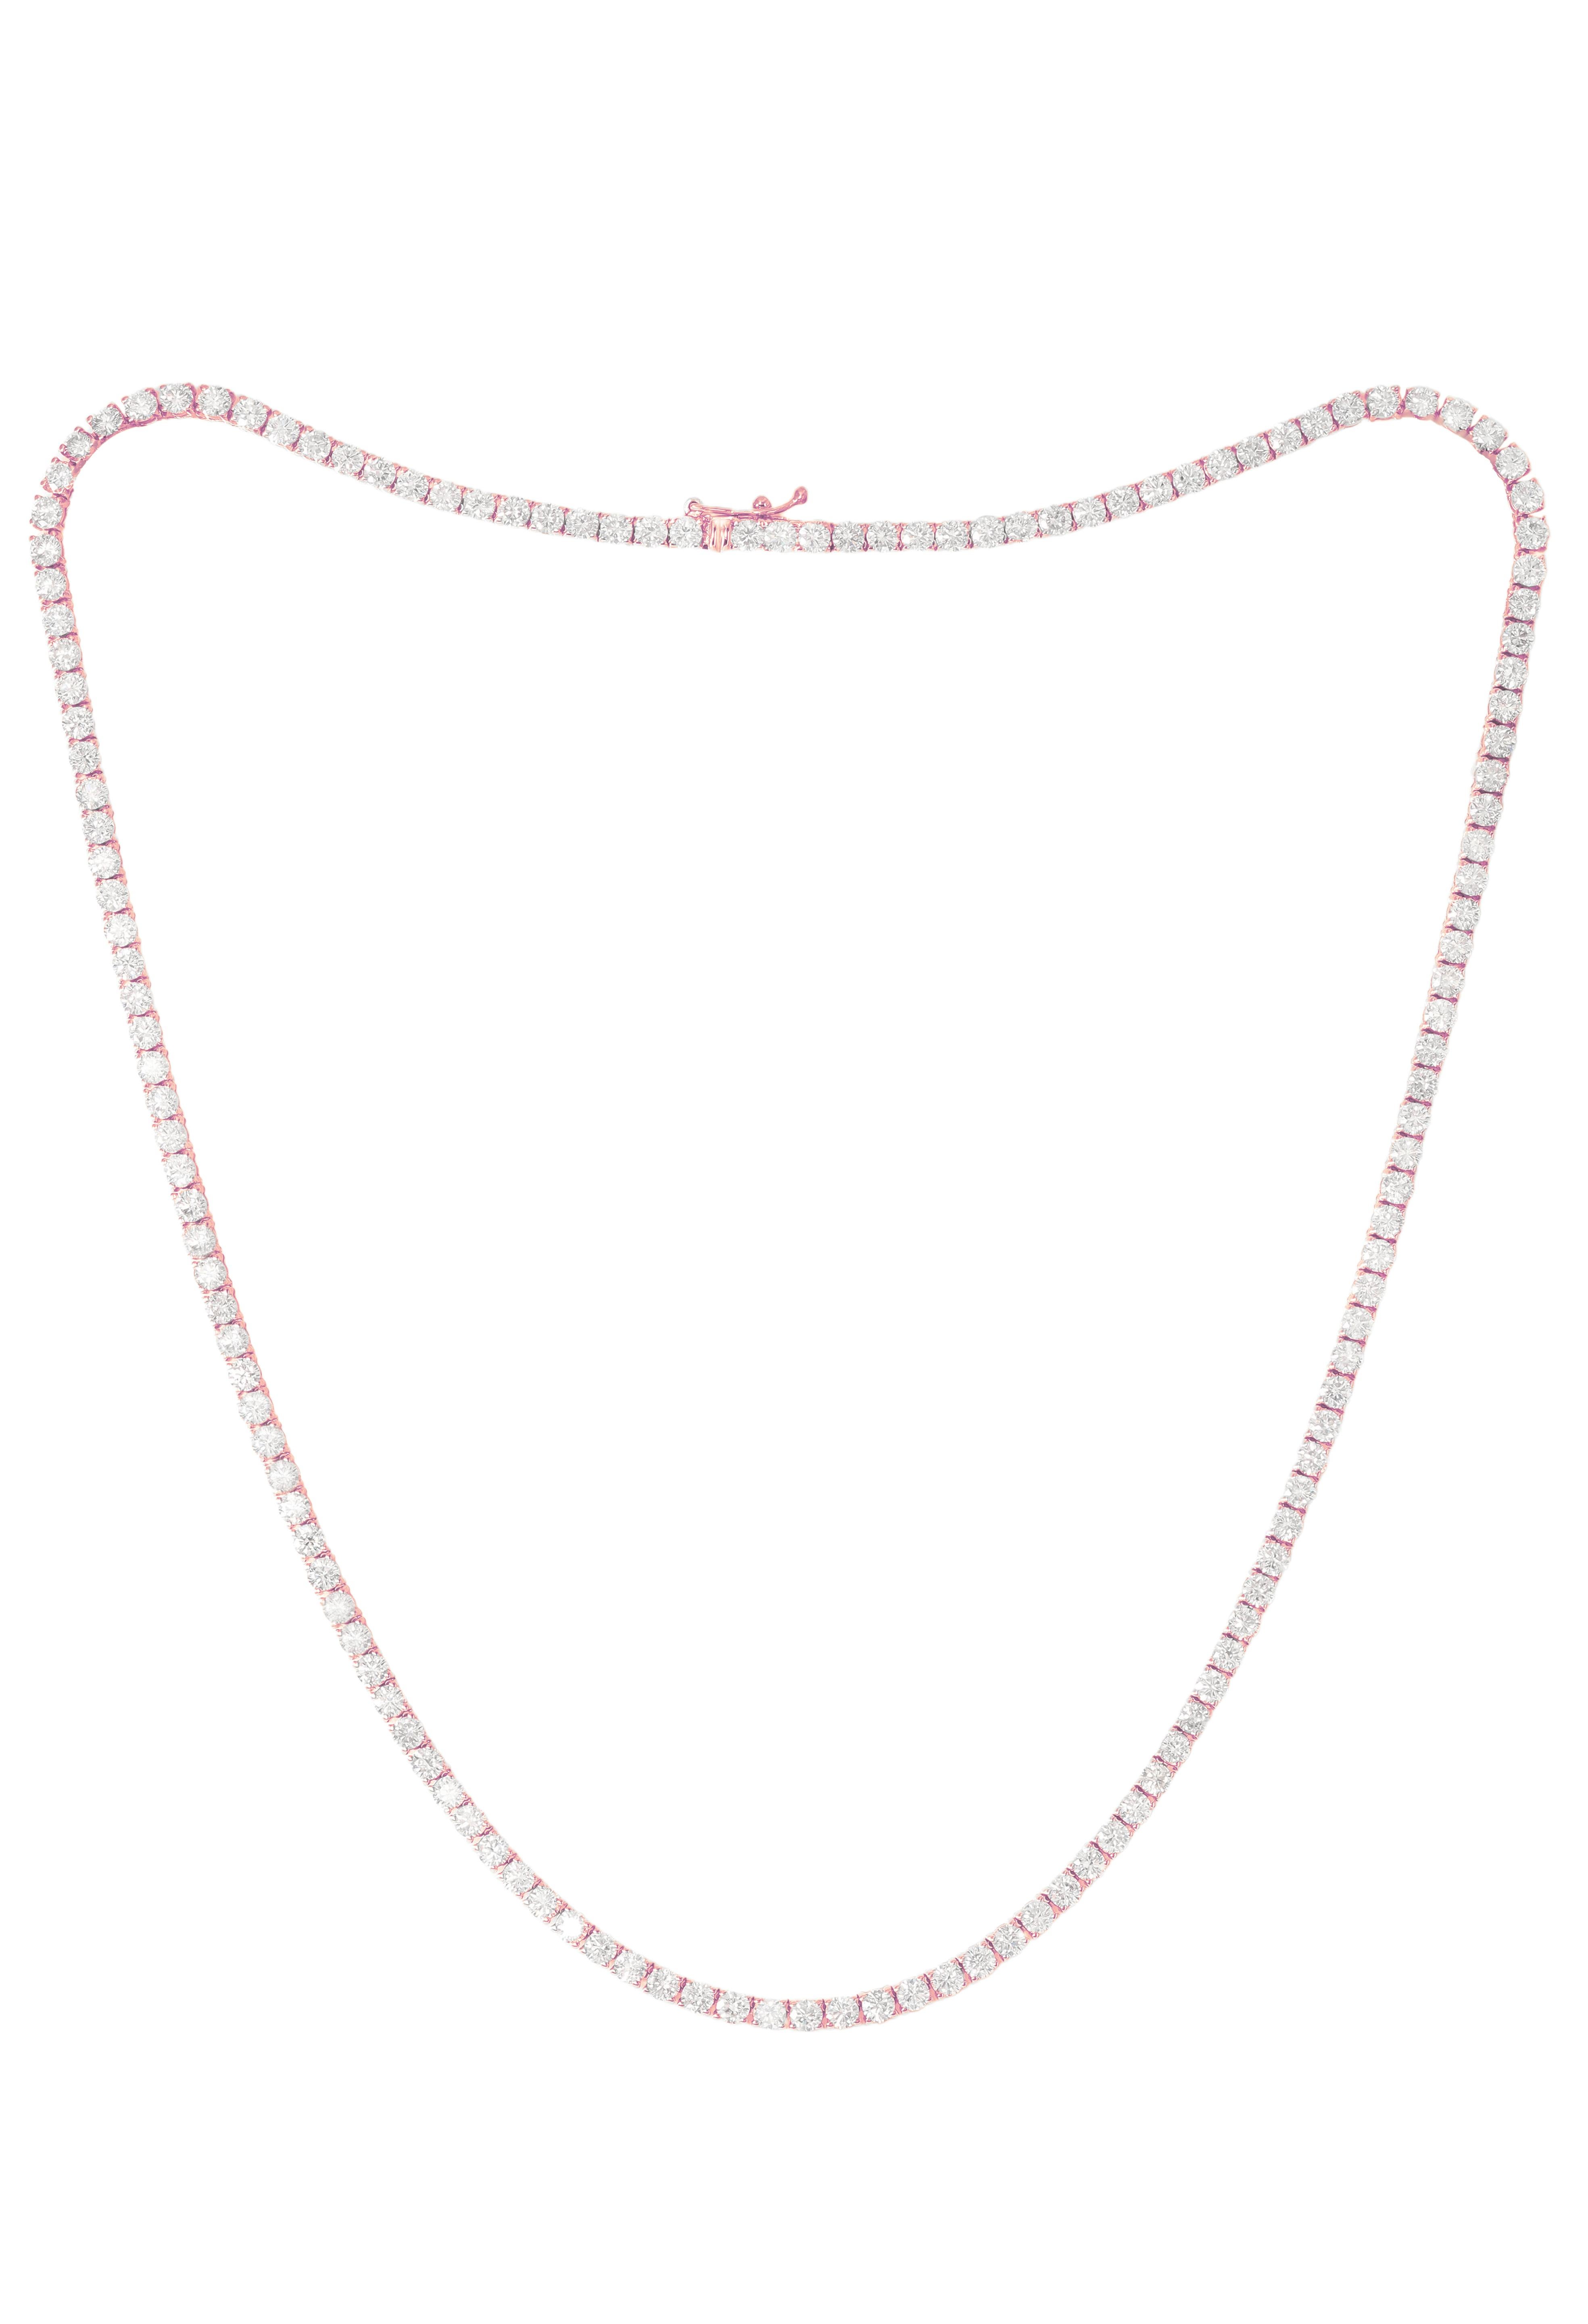 Custom 14K rose gold diamond straight line tennis necklace 11.45 cts  diamonds 156 stones 0.07 each. Color FG SI clarity. Excellent cut 17